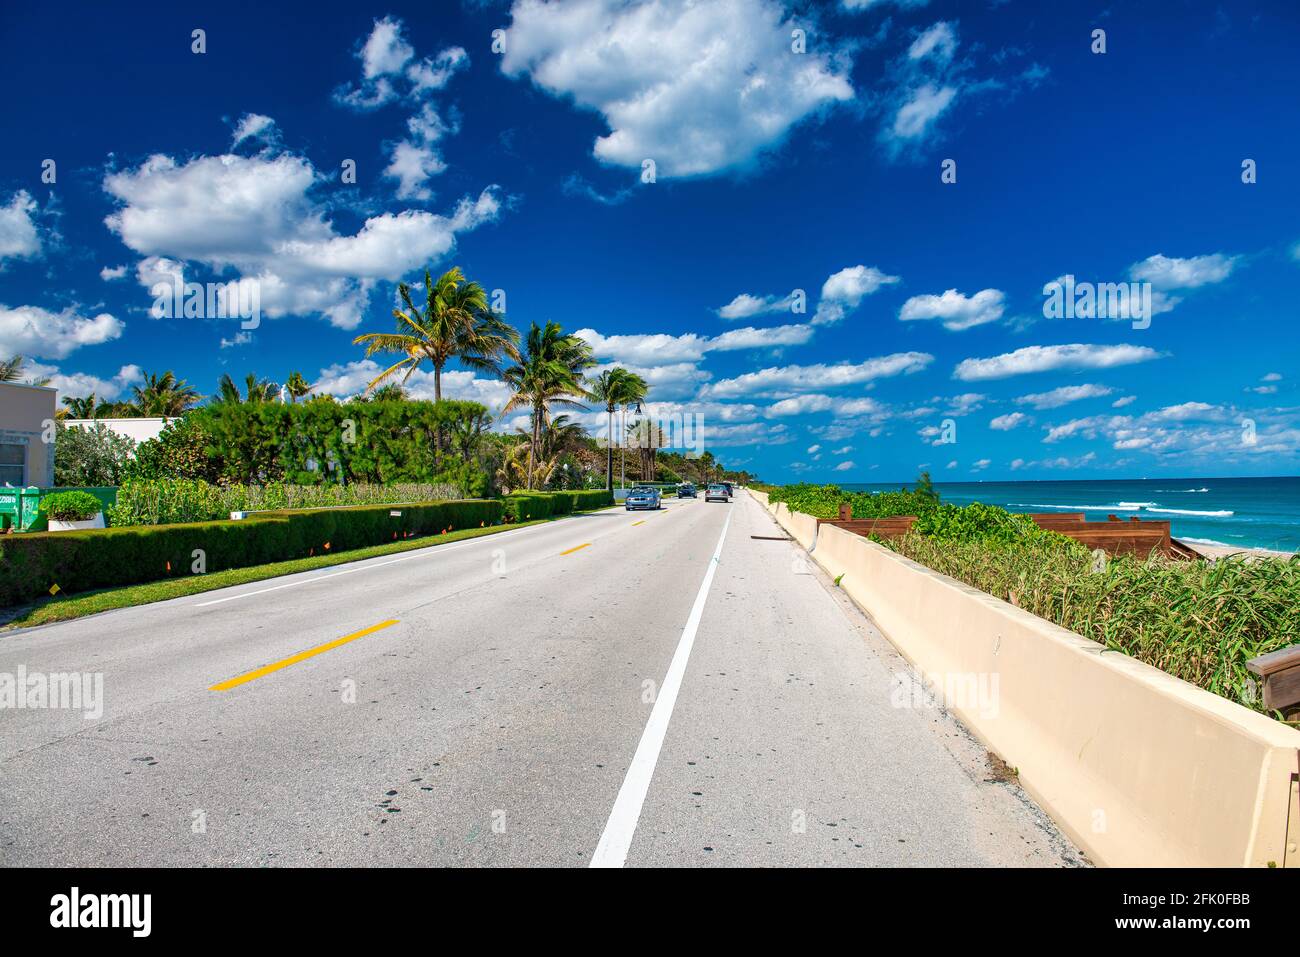 PALM BEACH, FL - FEBRUARY 2016: City traffic on a sunny day along the ocean. Stock Photo